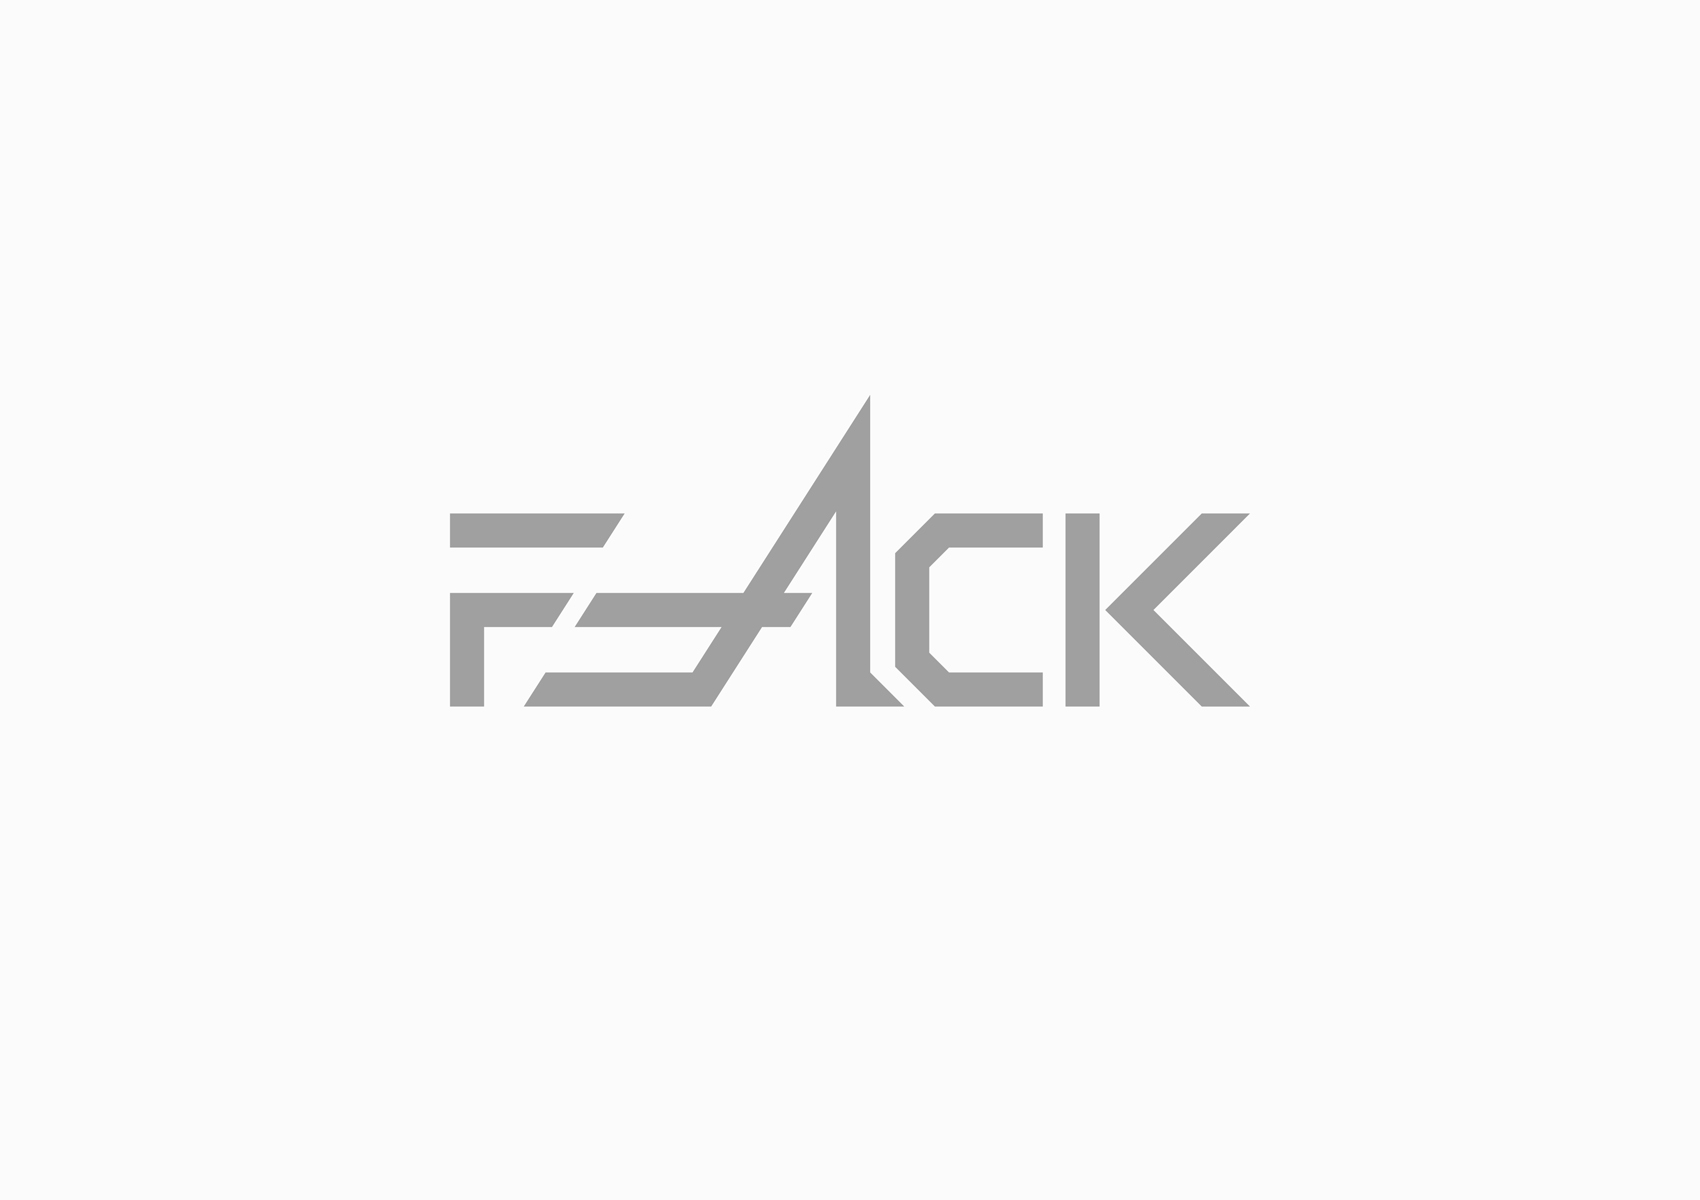 F-ACK_Logo&Stationary